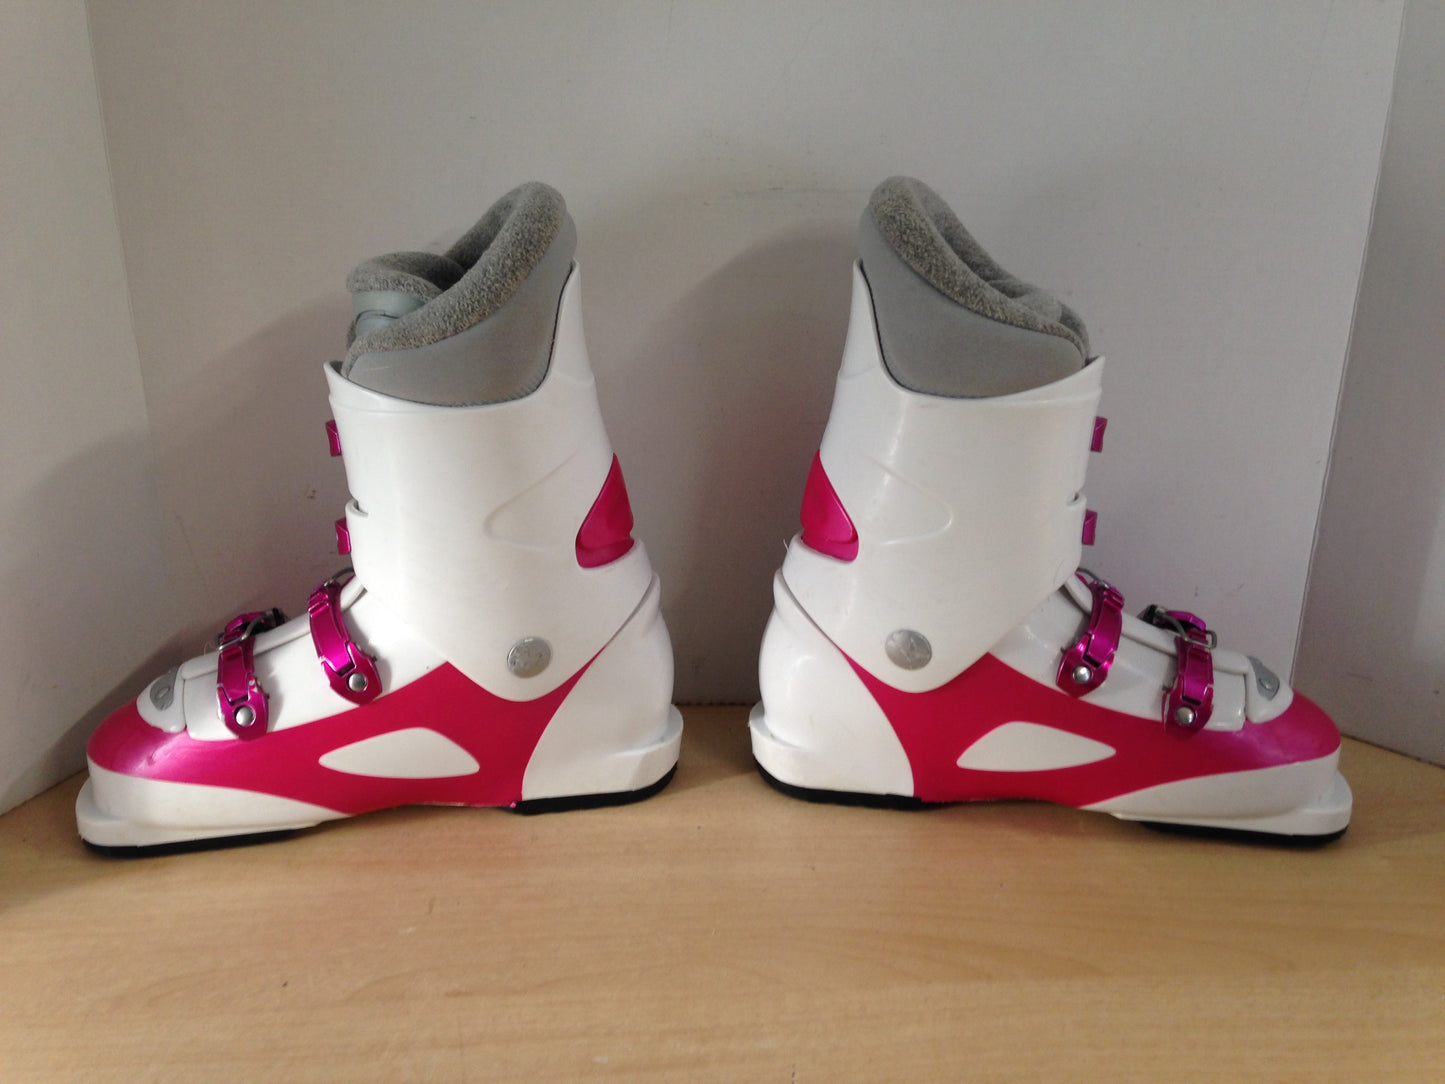 Ski Boots Mondo Size 24.5 Ladies Size 7 283 mm Rossignol Pink White Lime